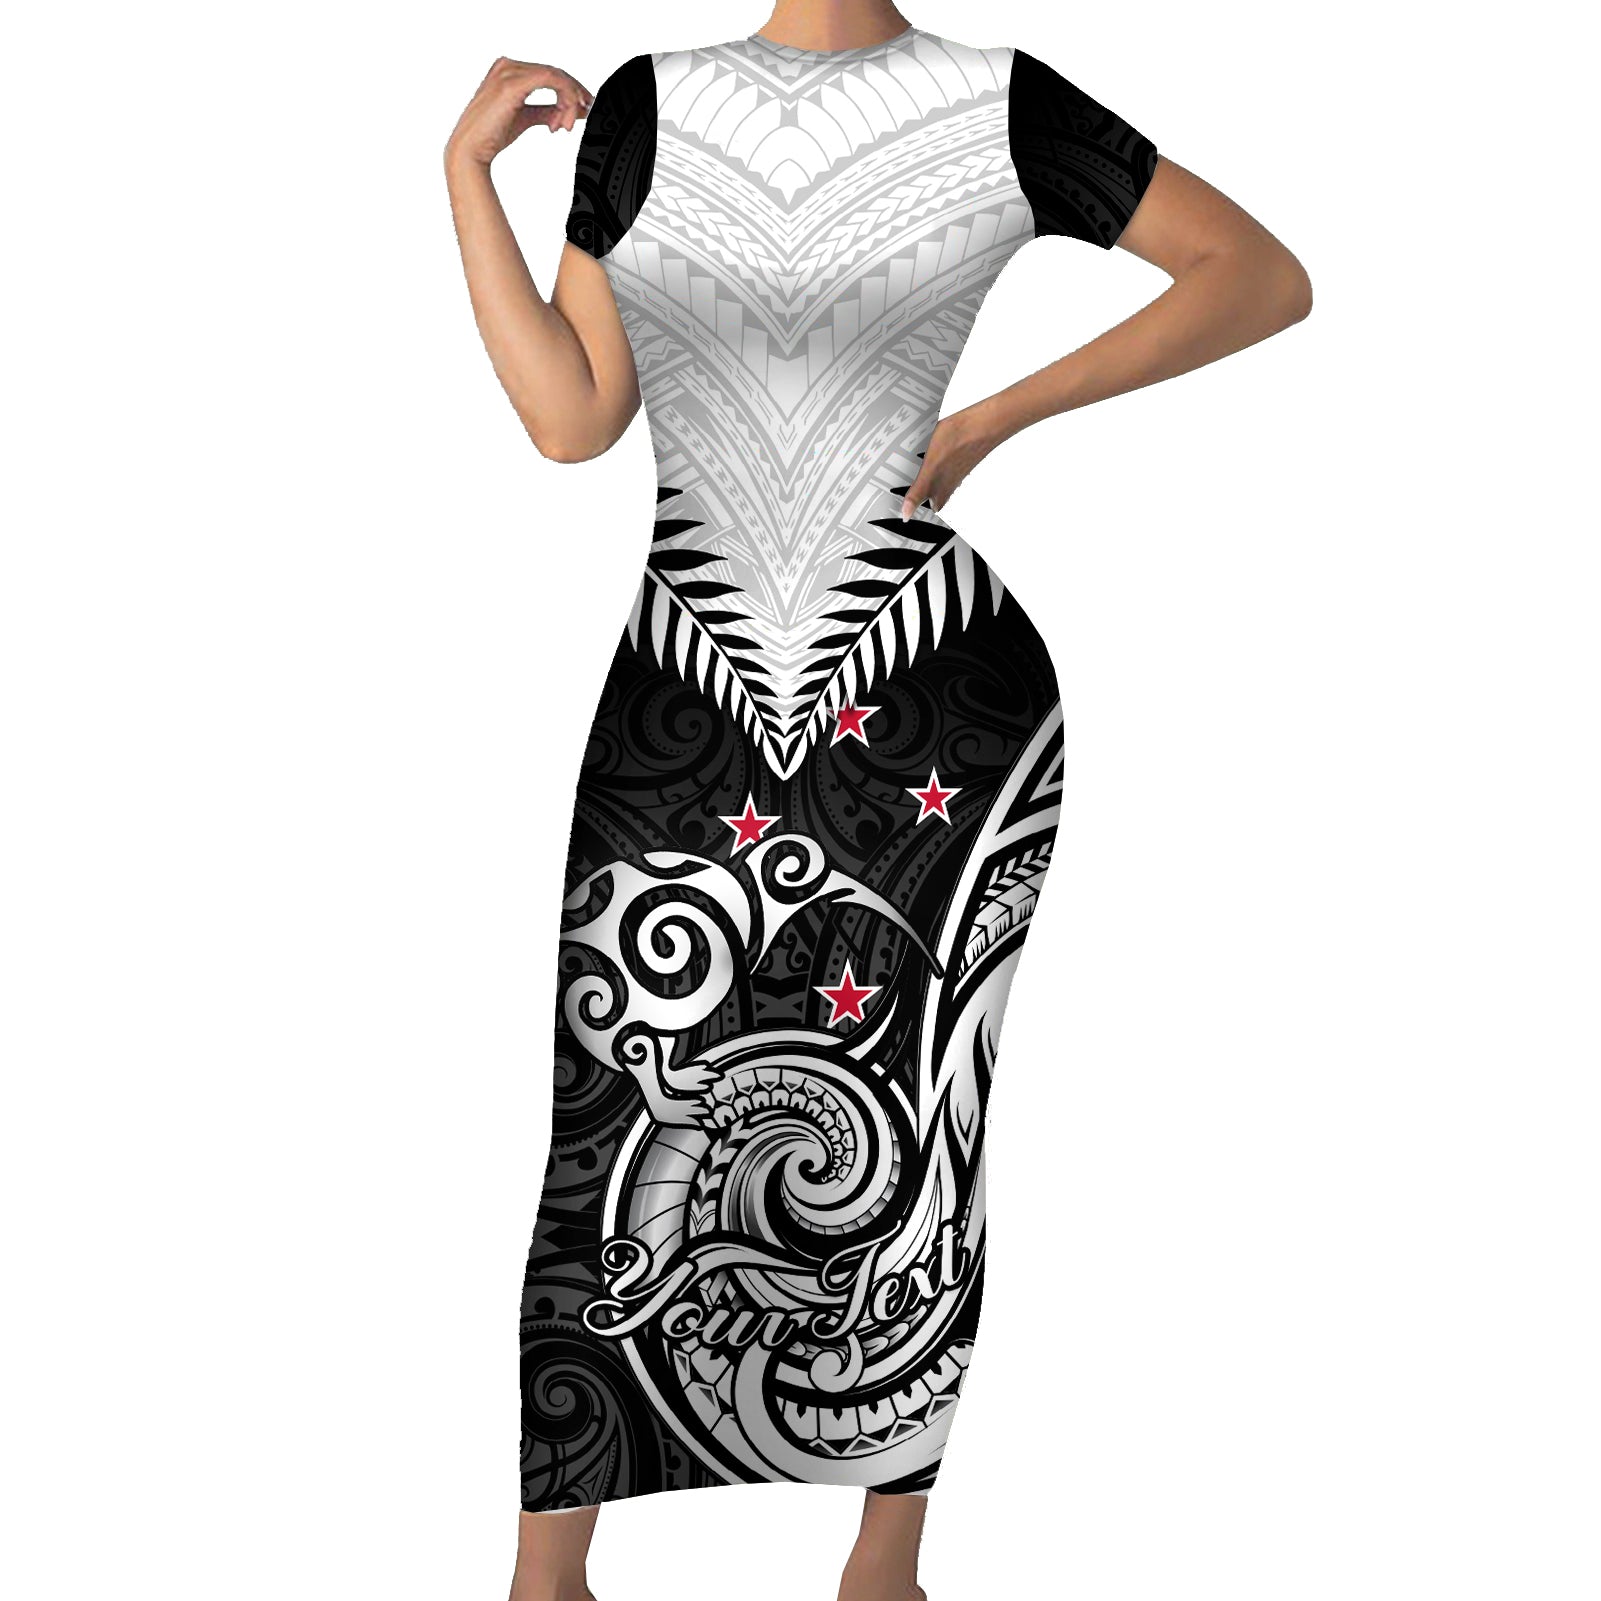 Personalised New Zealand Short Sleeve Bodycon Dress Aotearoa Maori Kiwi Black Fern LT01 Long Dress Black - Polynesian Pride